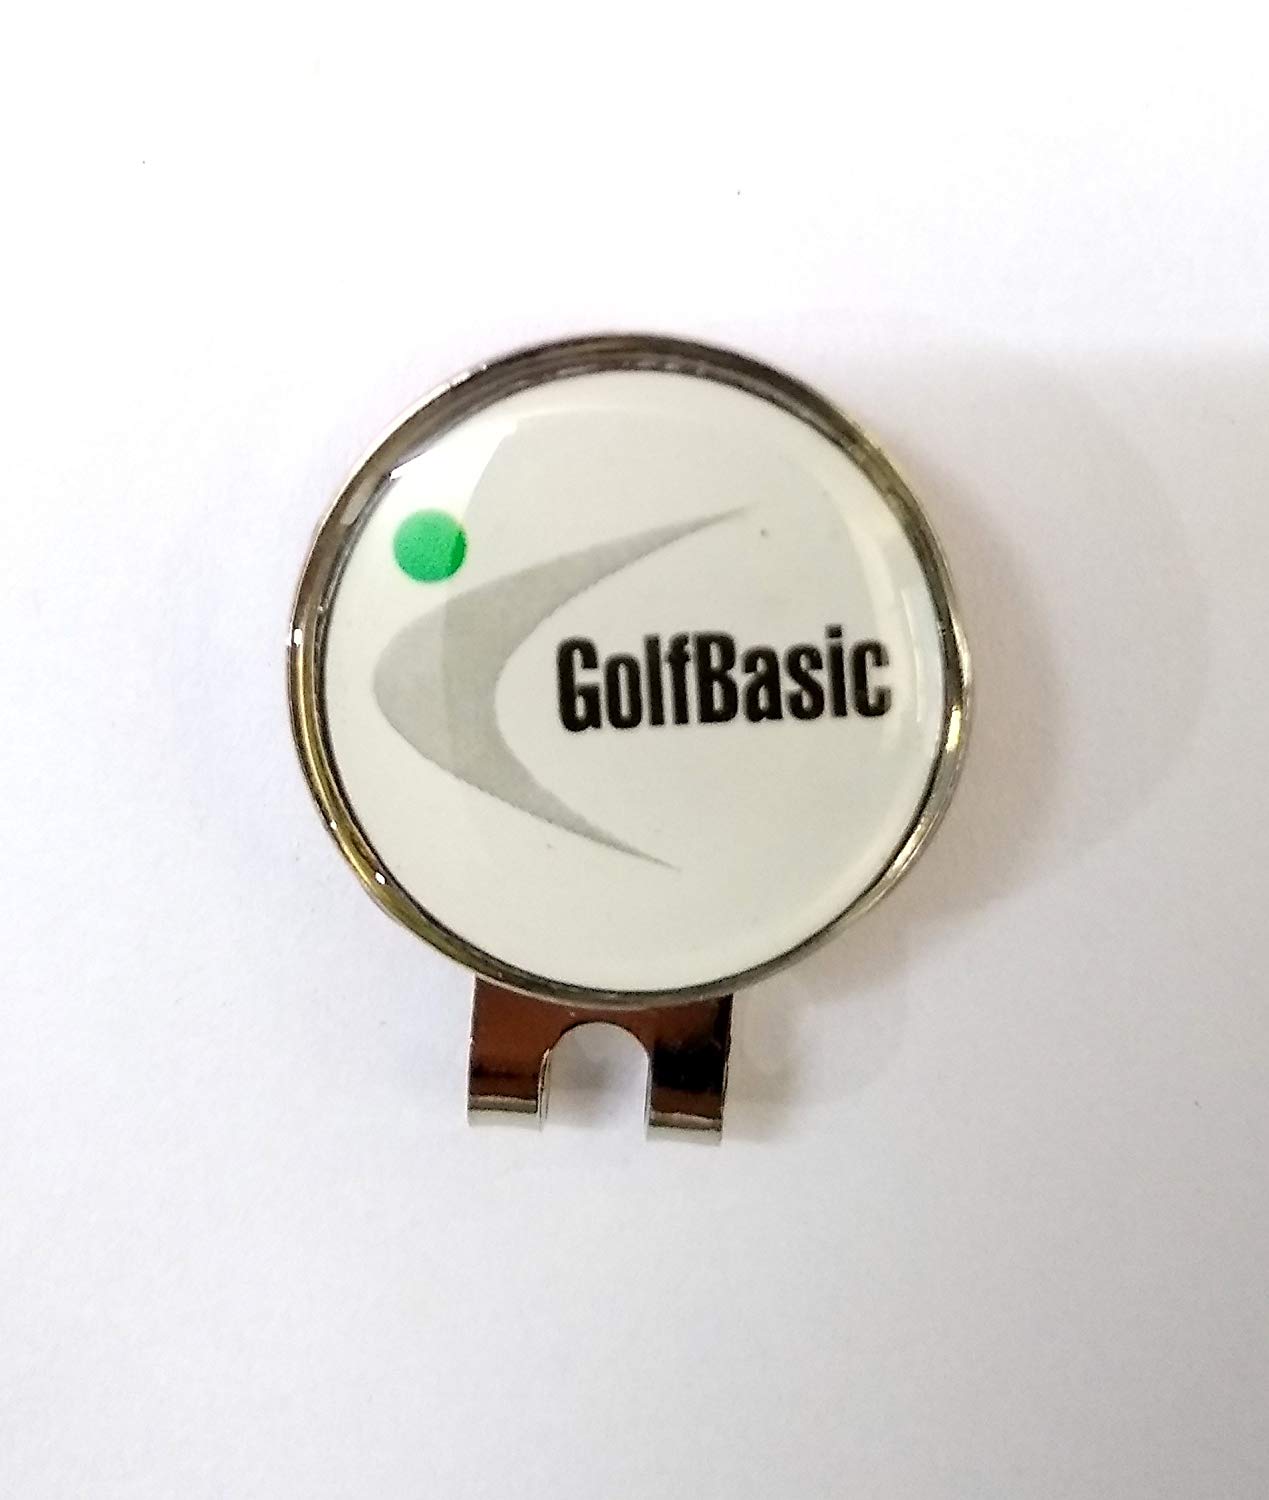 GolfBasic Magnetic Cap Clip & Ball Marker